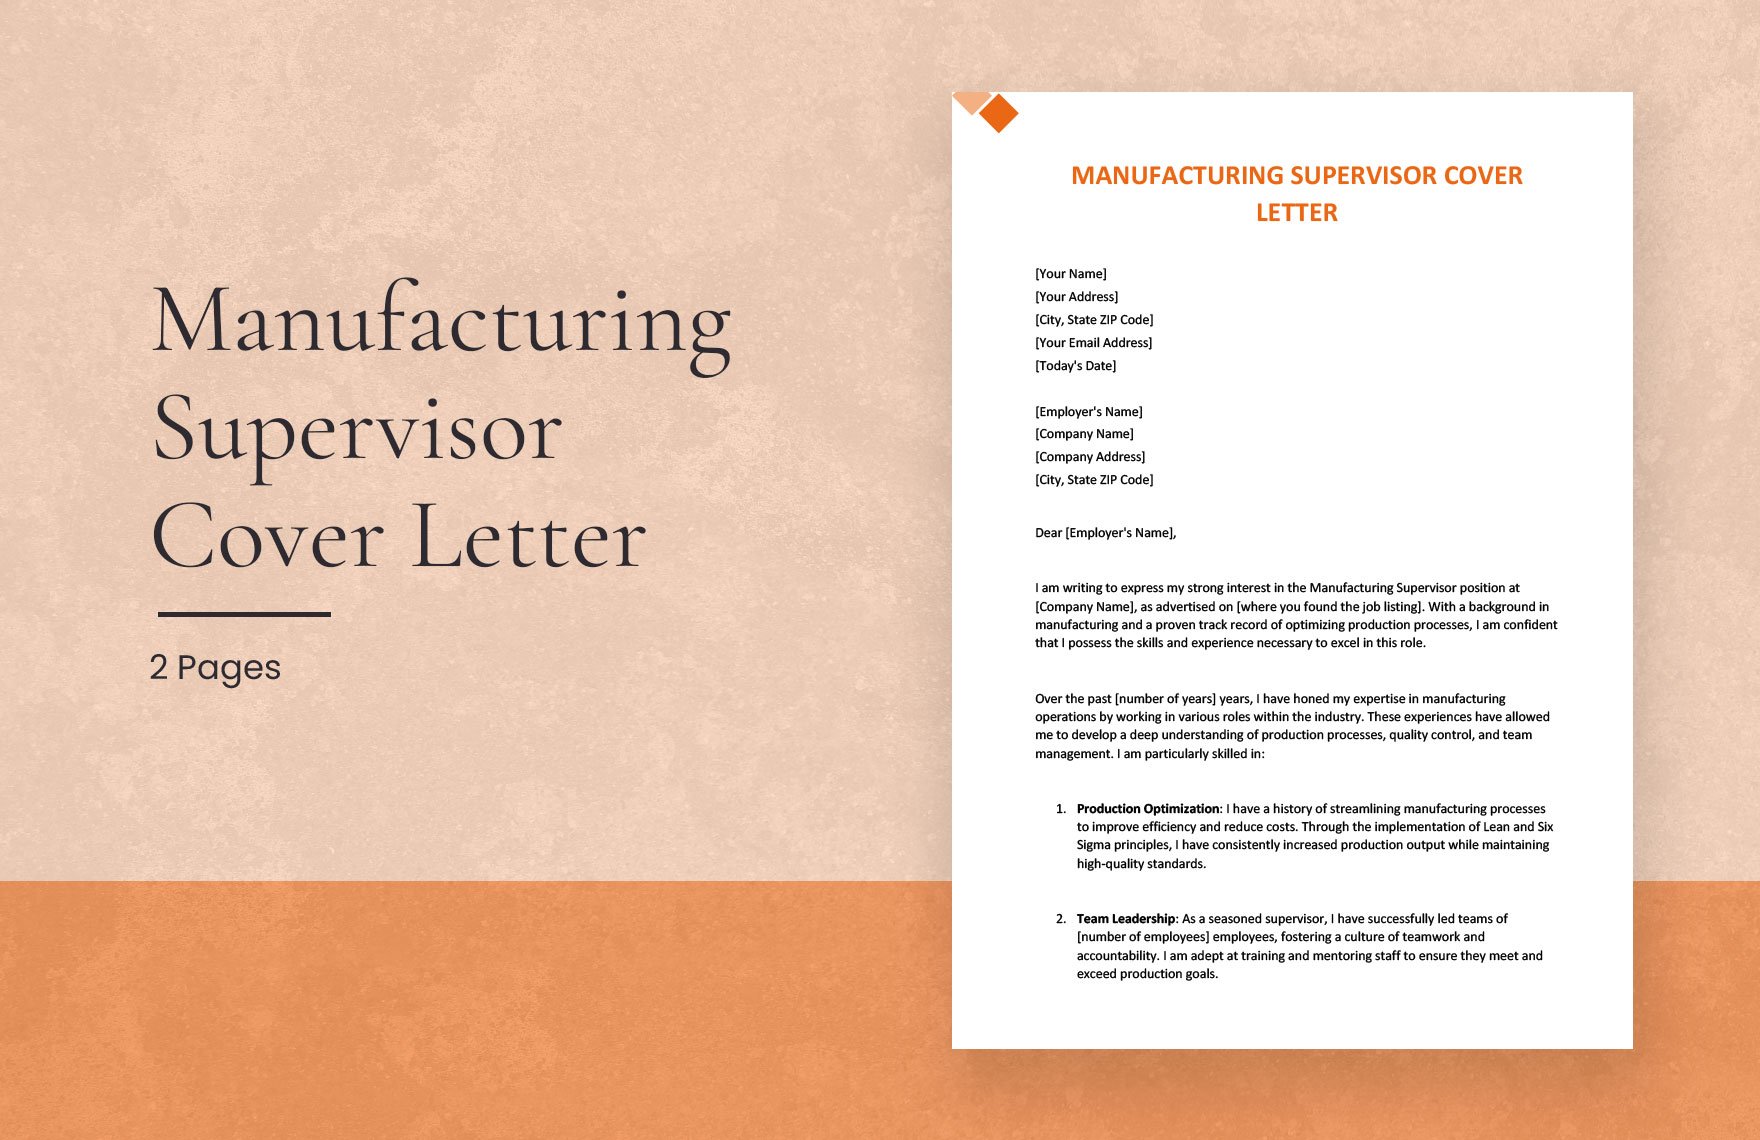 Manufacturing Supervisor Cover Letter